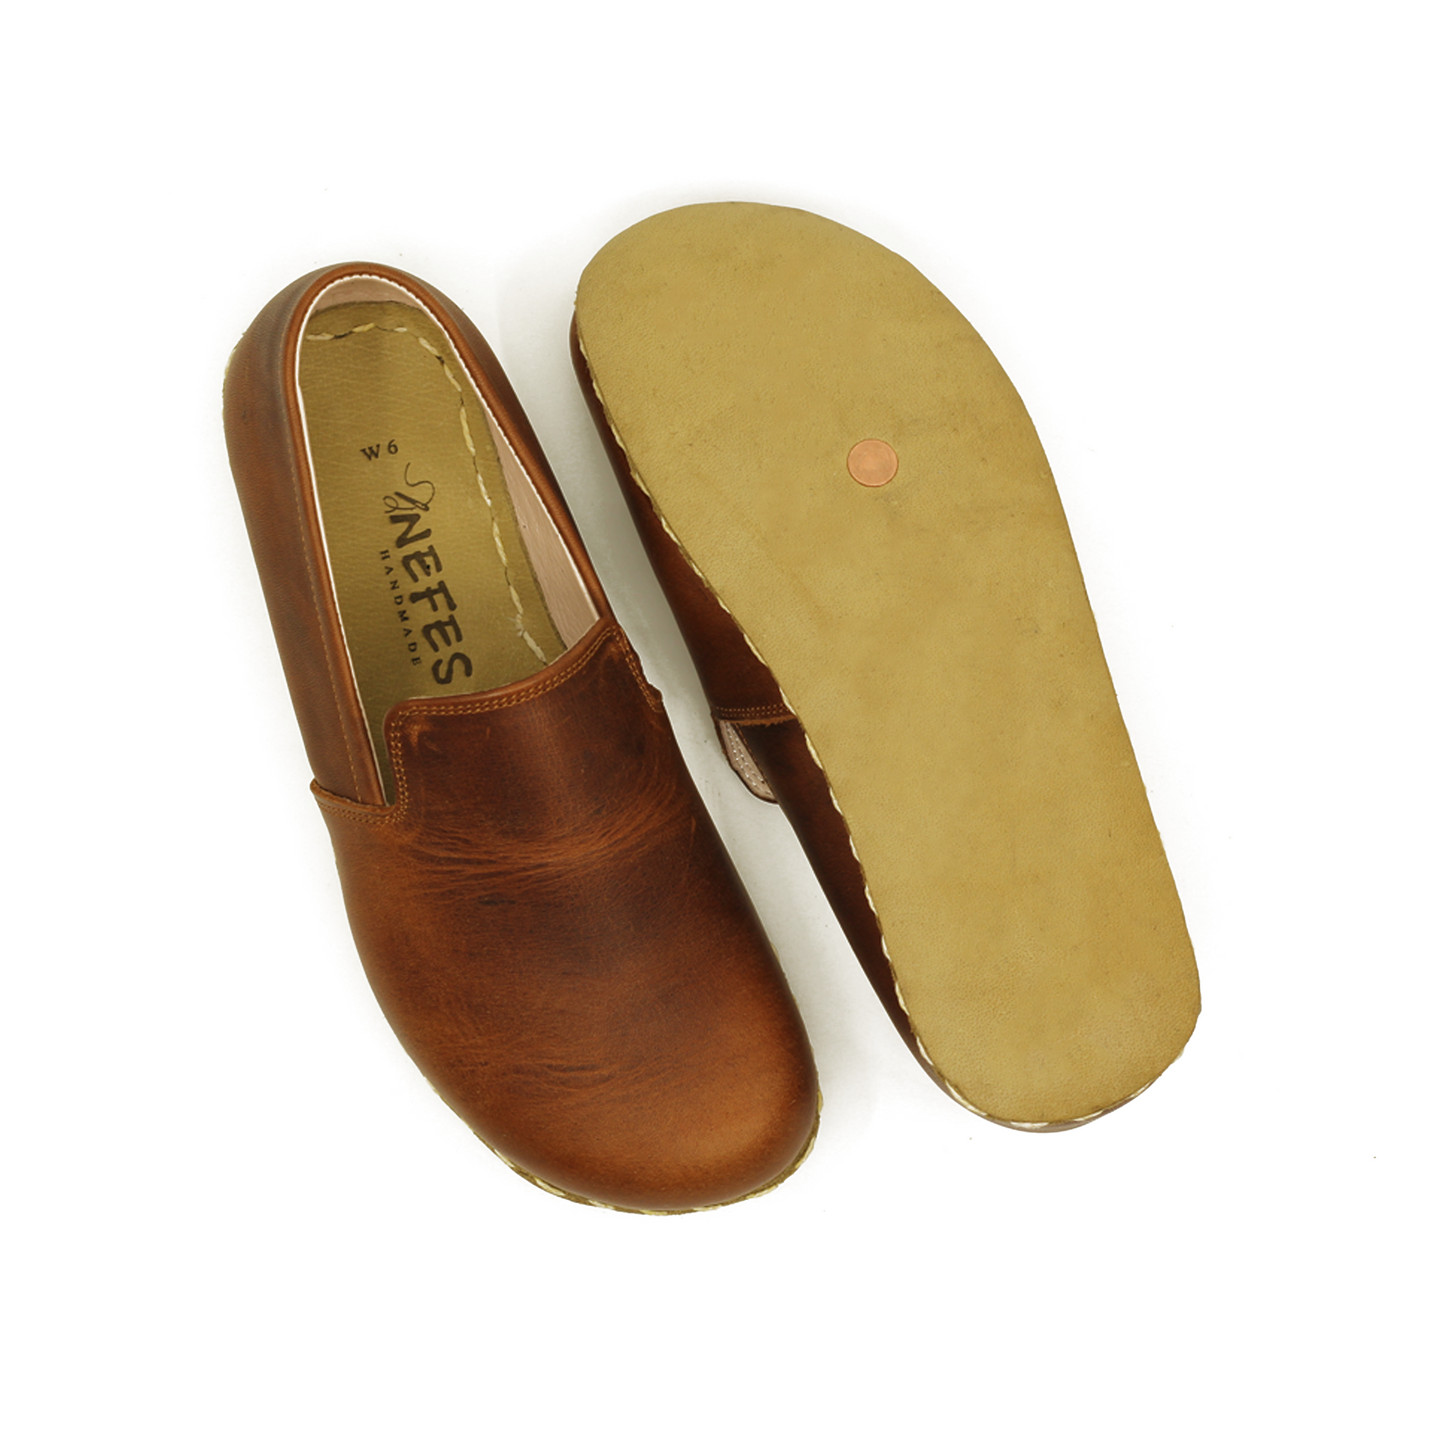 Men's Barefoot Loafers in New Crazy Brown - Zero Drop & Handmade Leather